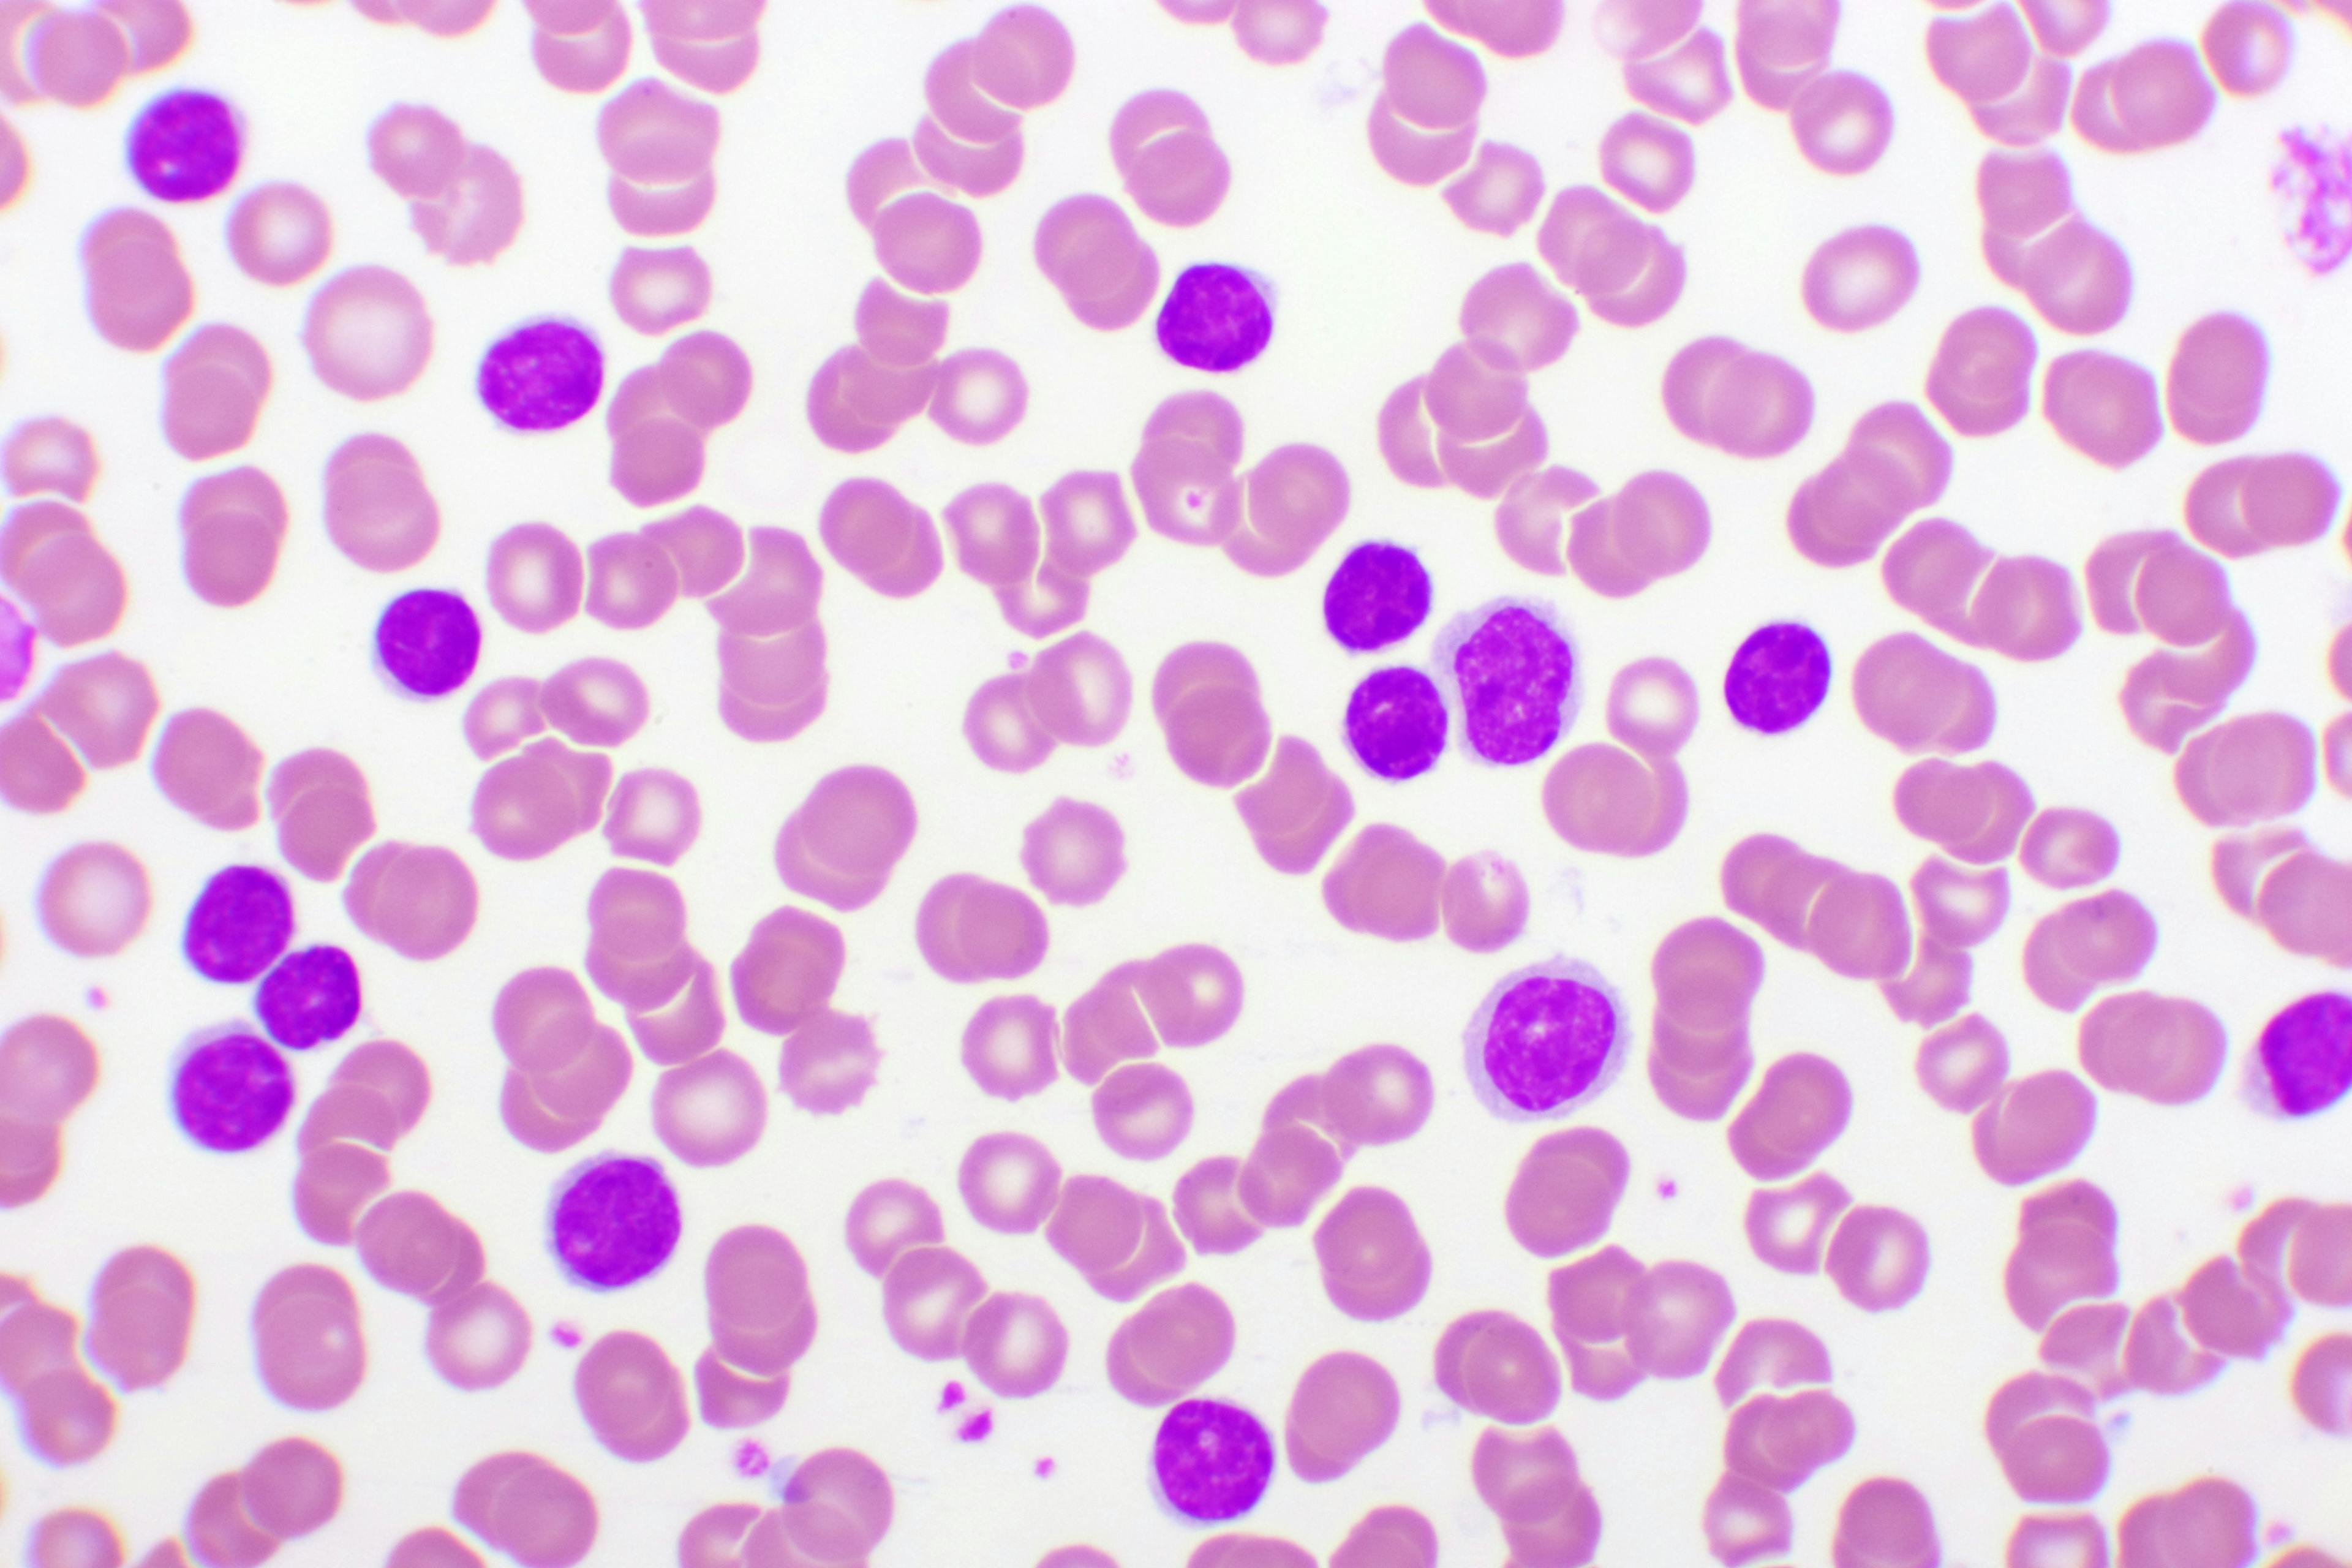 Blood eosinophil cells